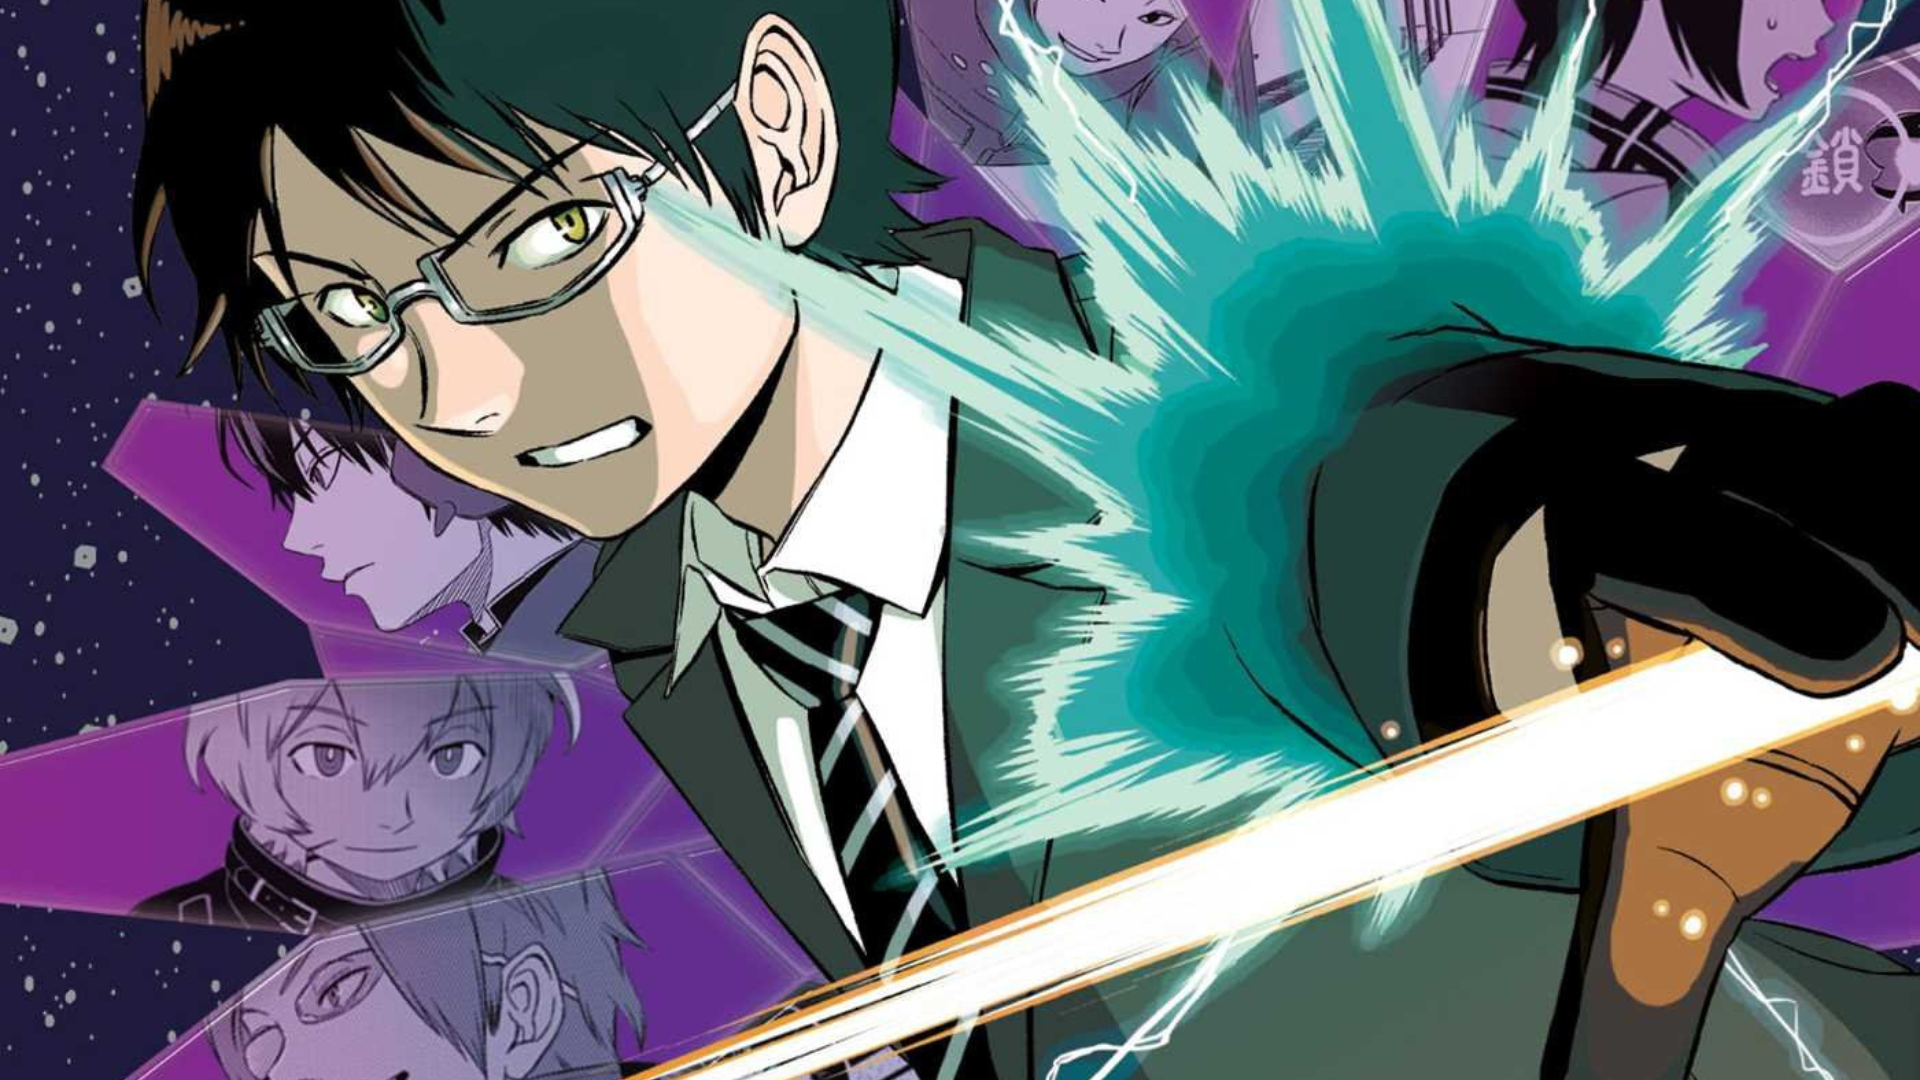 World Trigger Manga Series Goes on One-Month Hiatus - Anime Corner